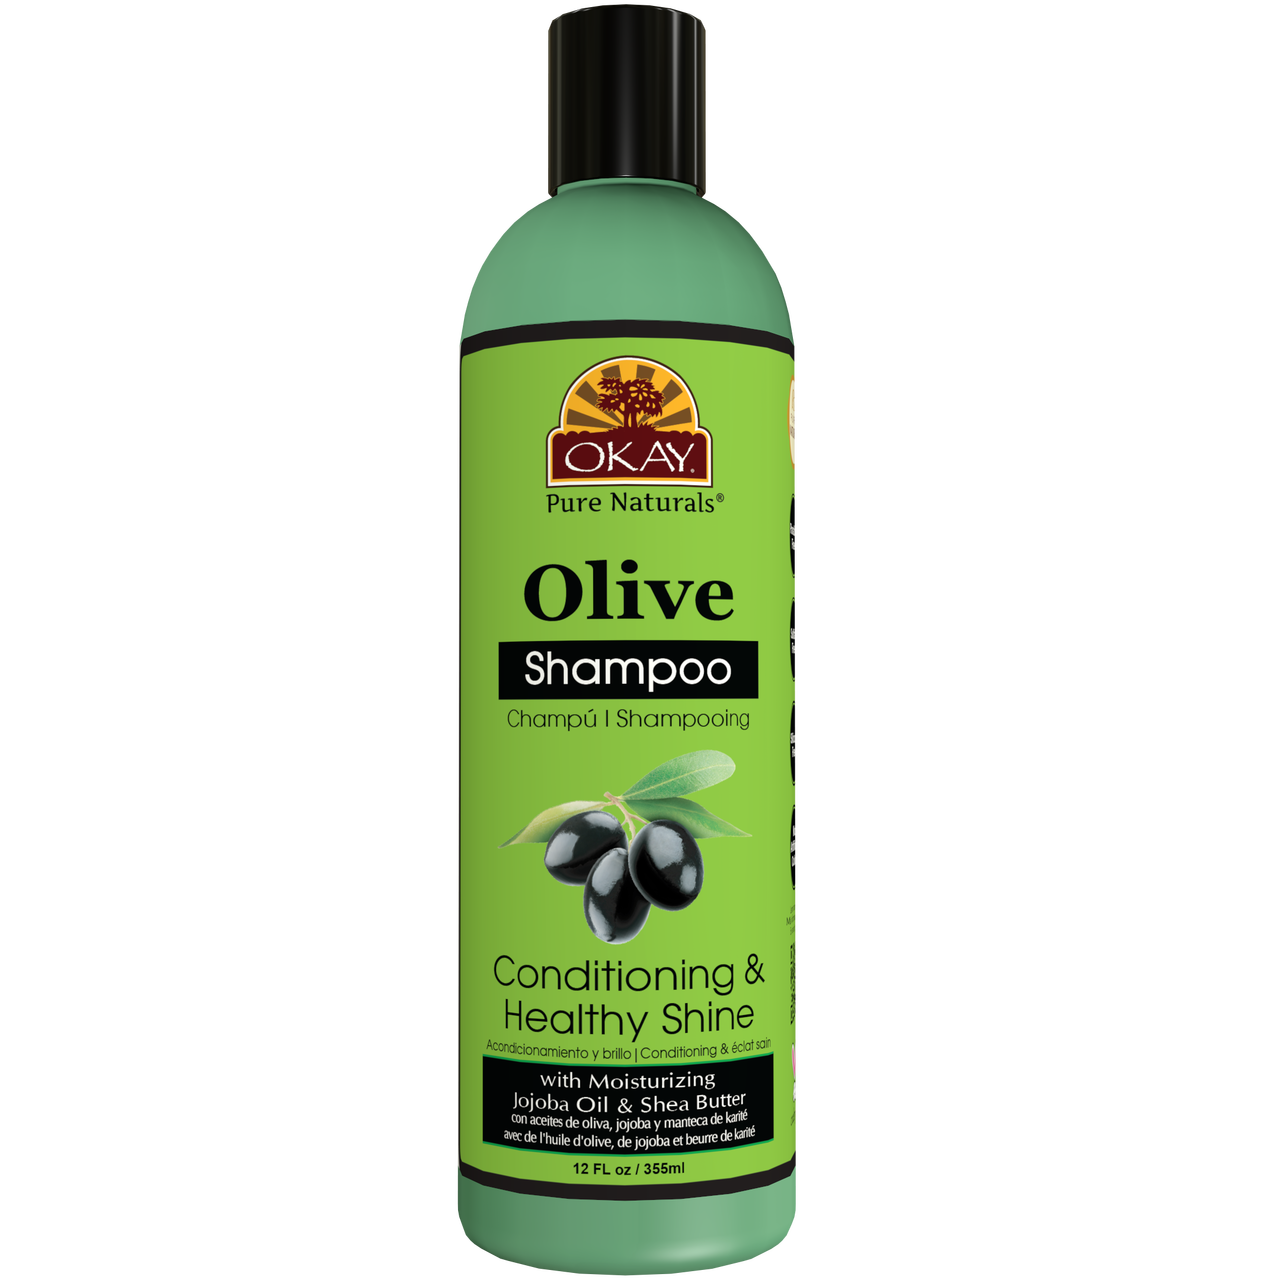  Okay Olive Shampoo